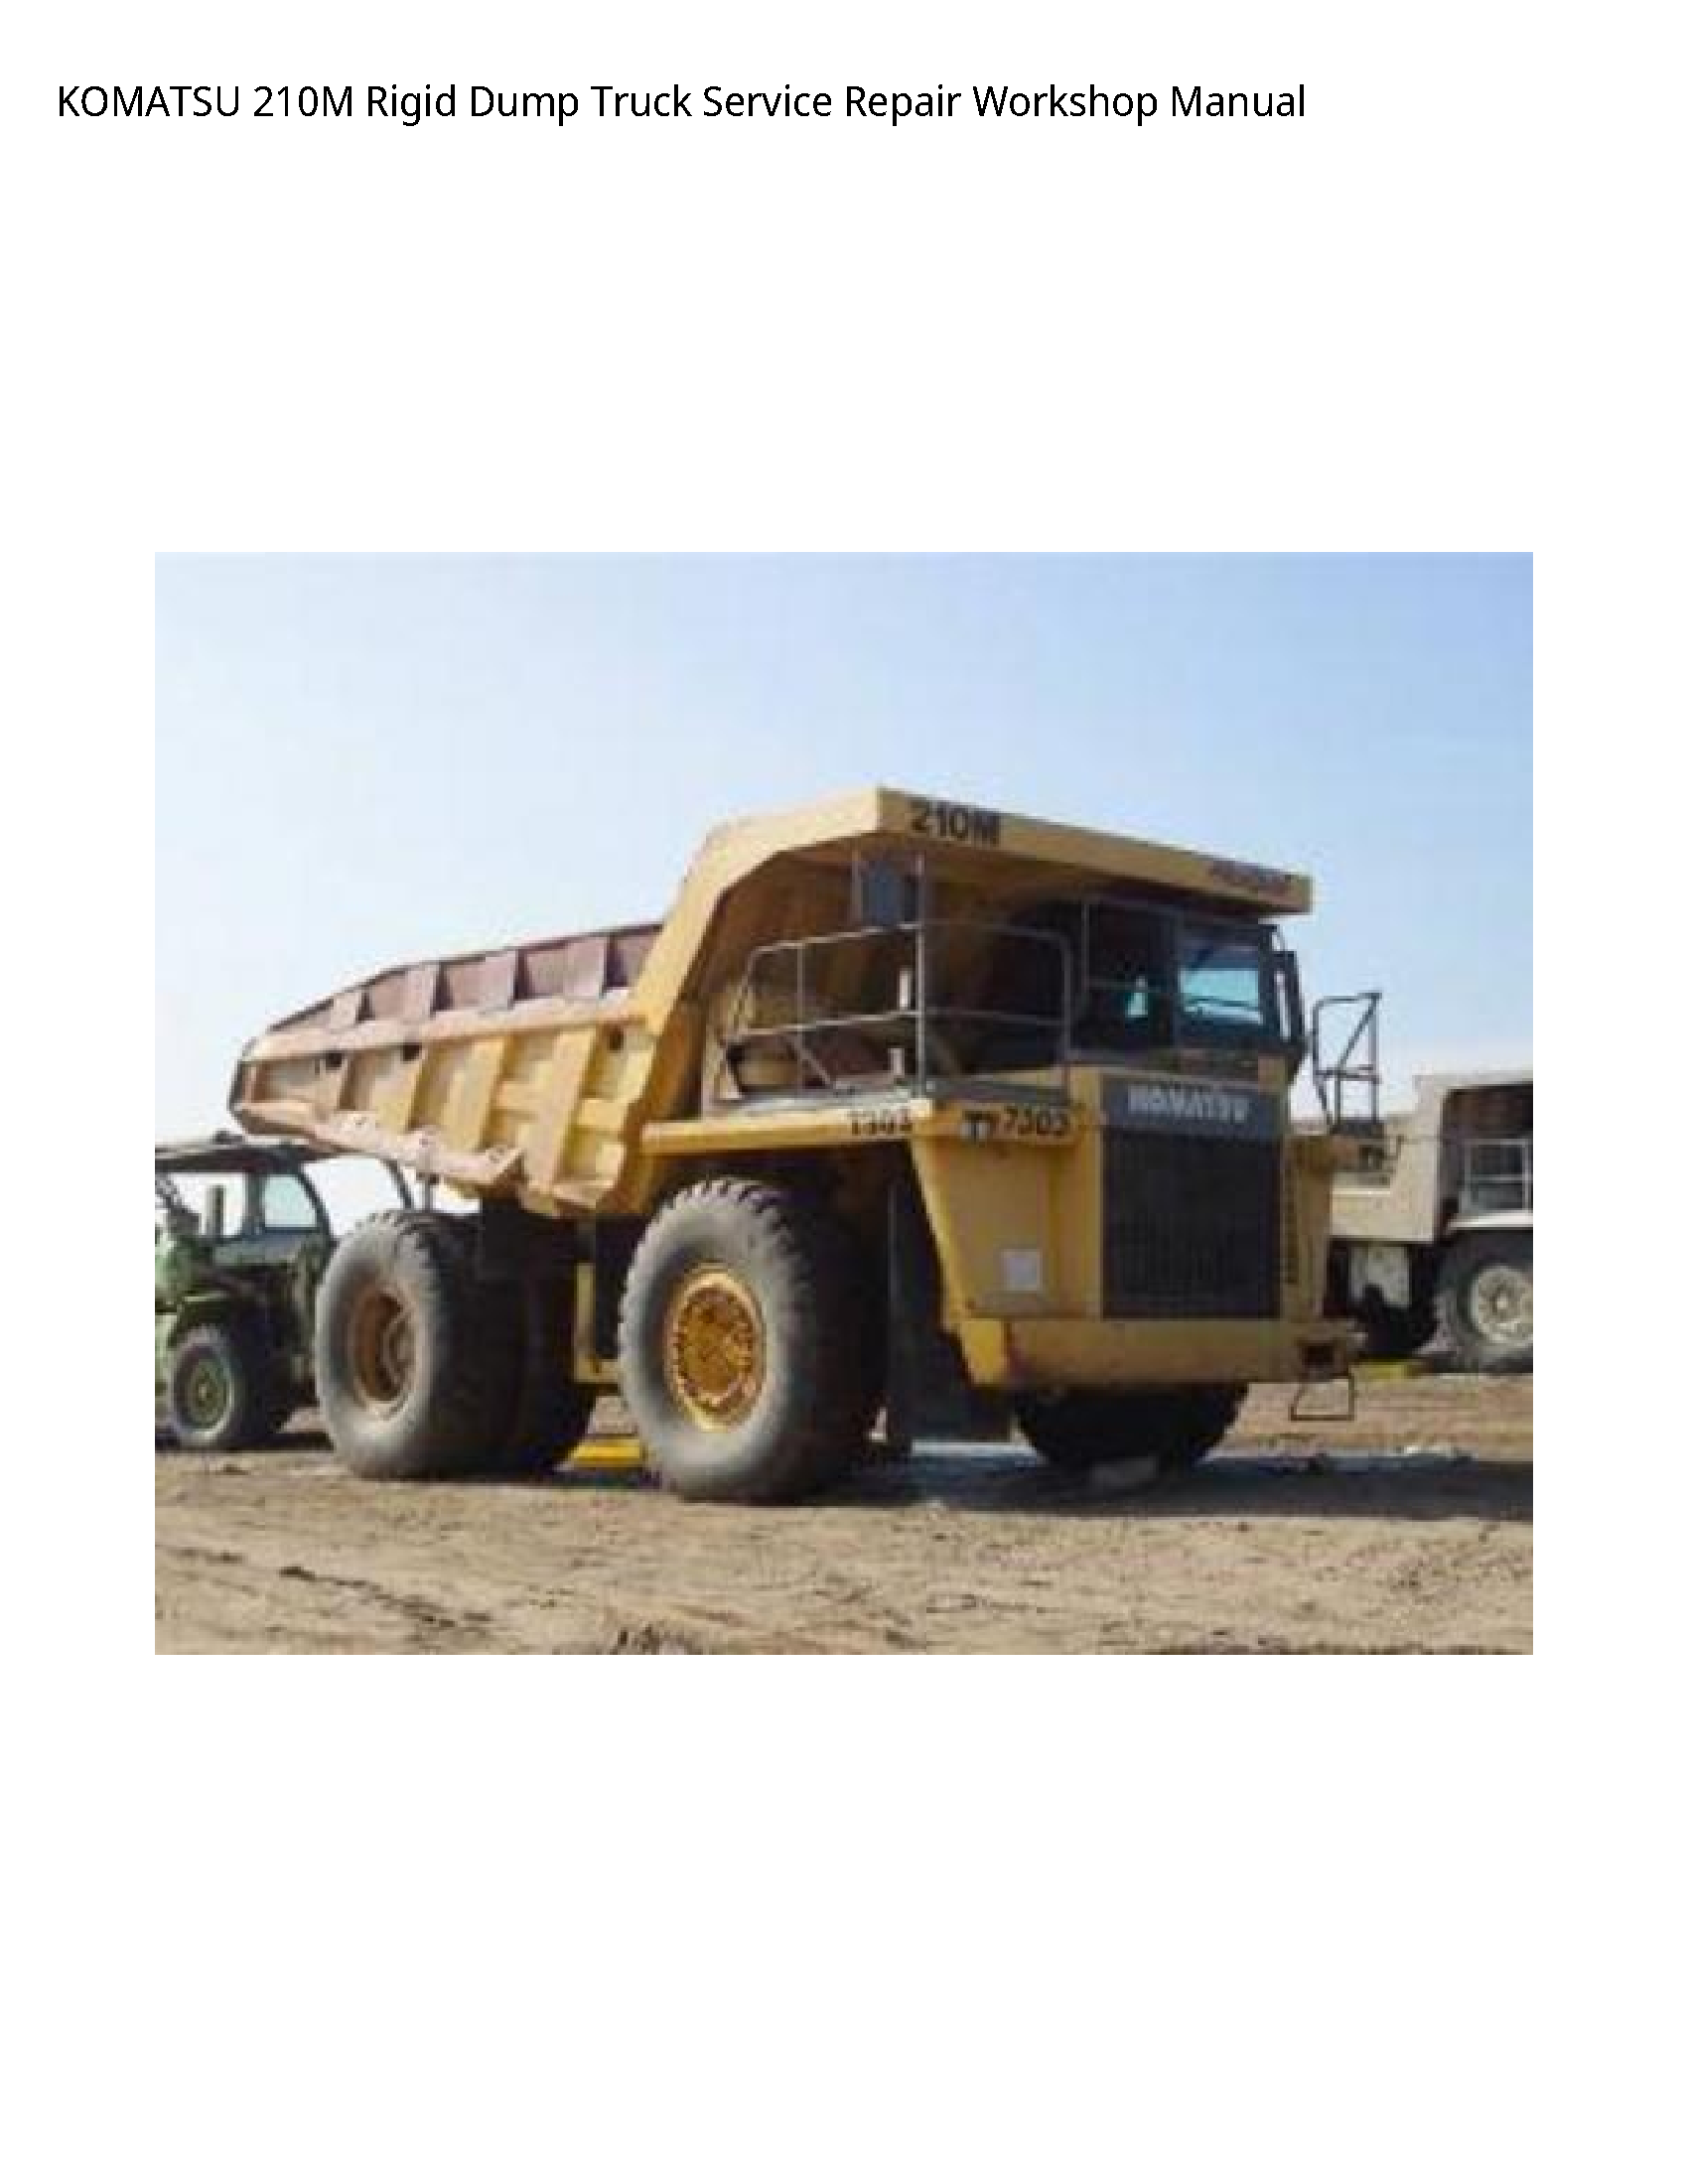 KOMATSU 210M Rigid Dump Truck manual